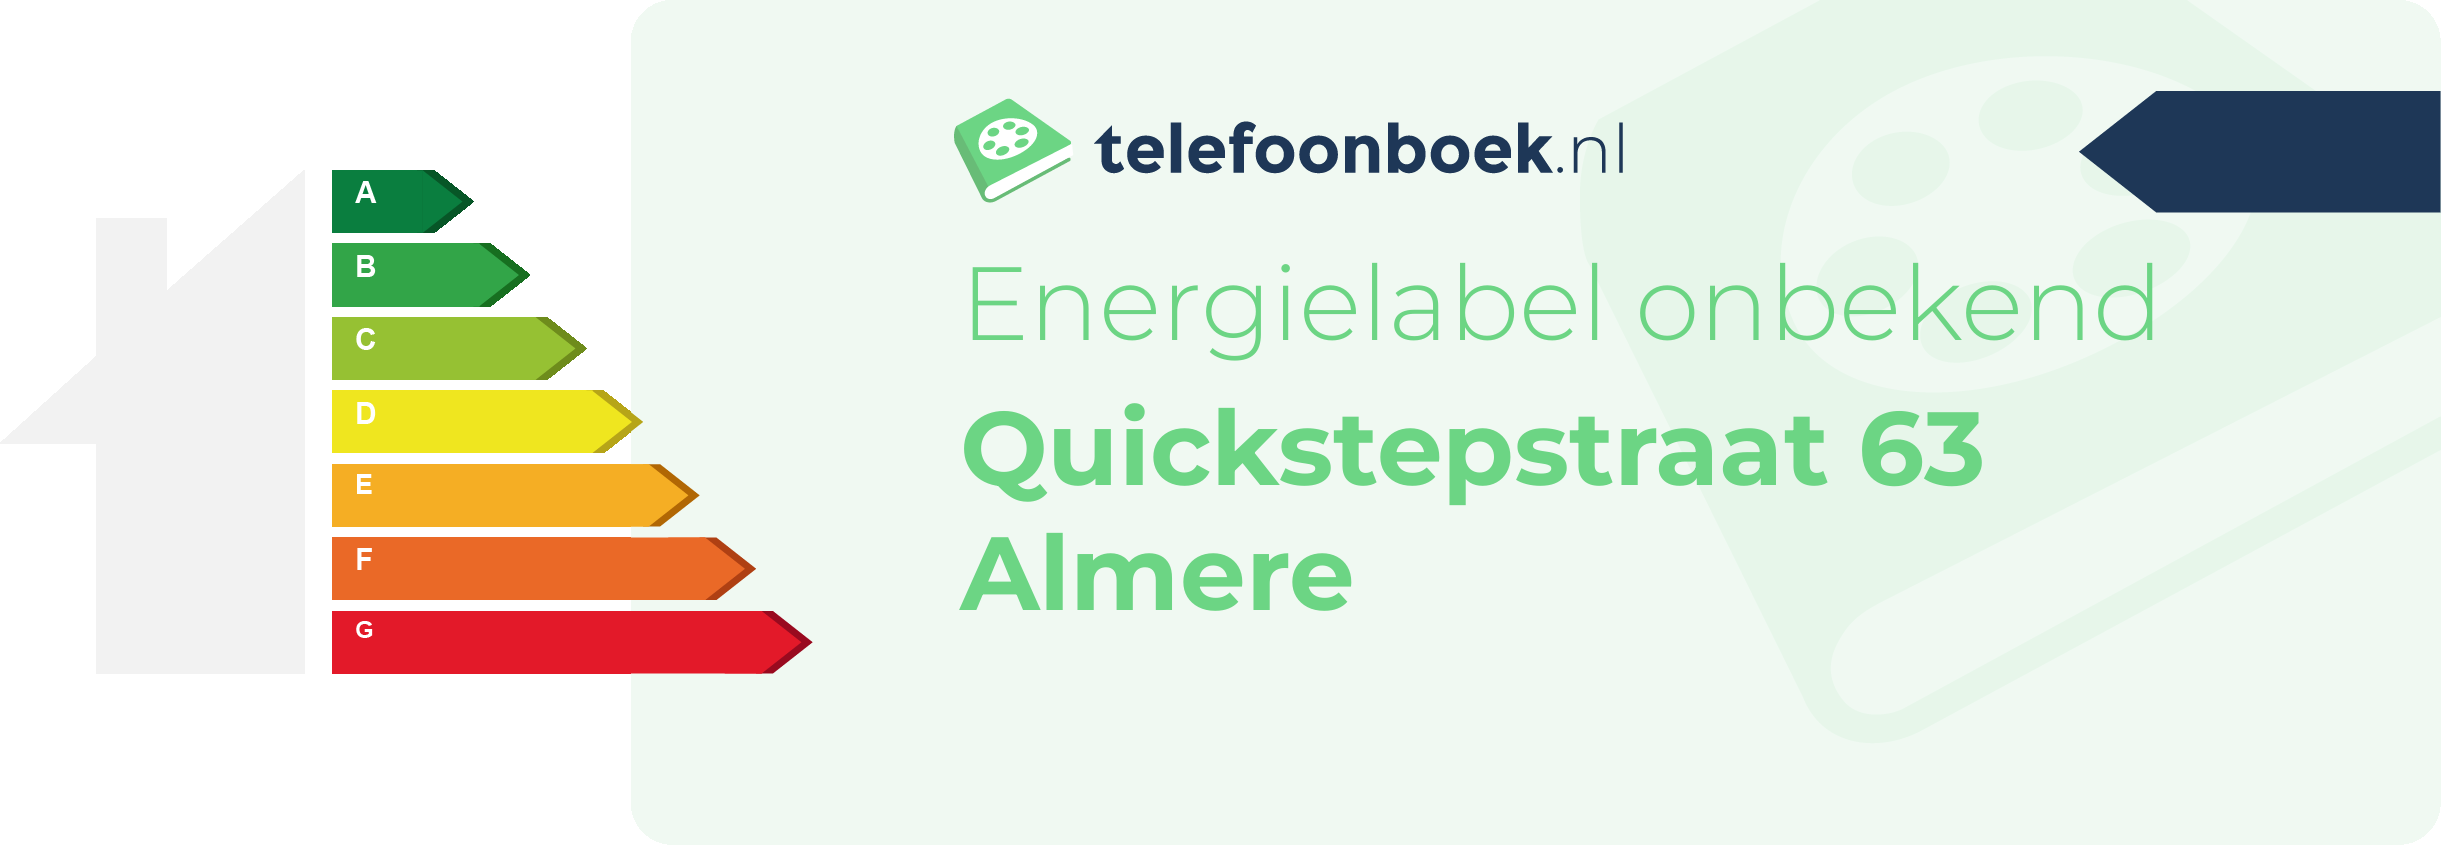 Energielabel Quickstepstraat 63 Almere